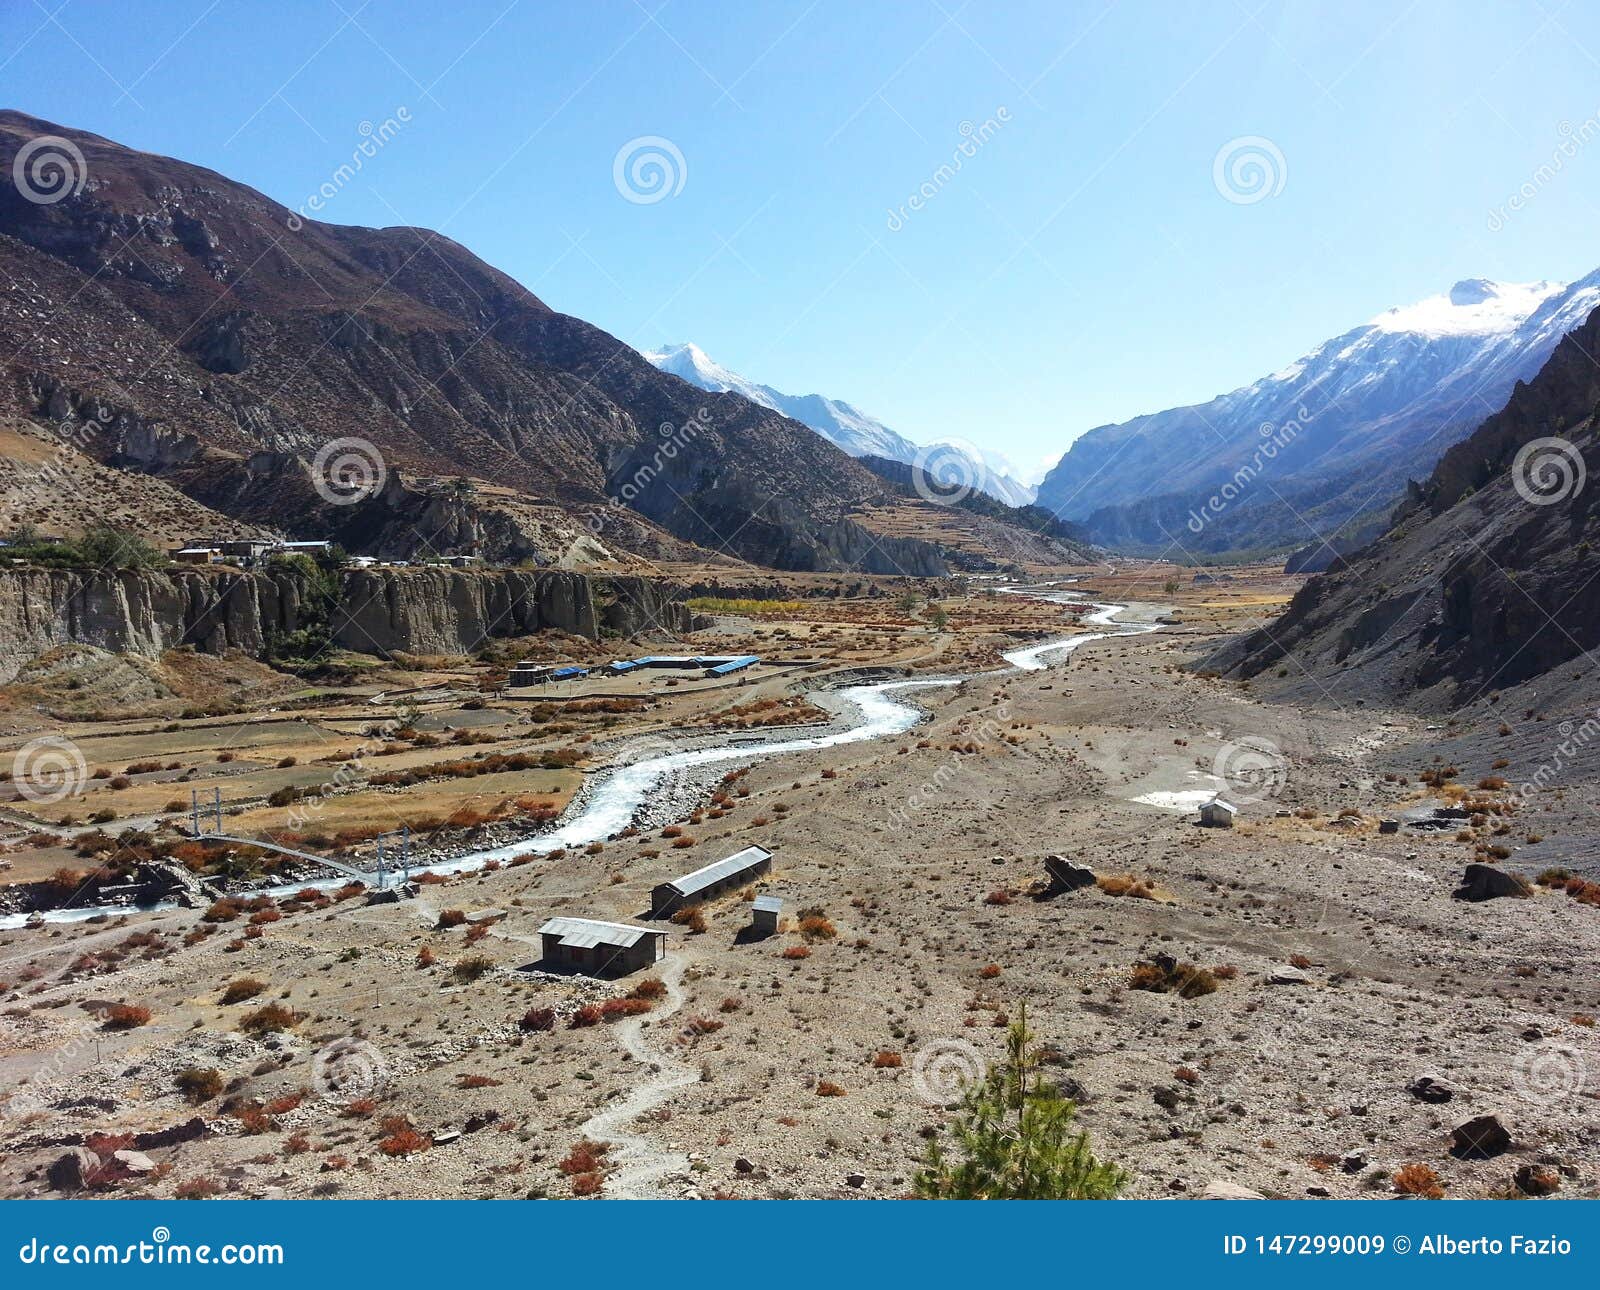 Nepal far image. Image of region, - 147299009